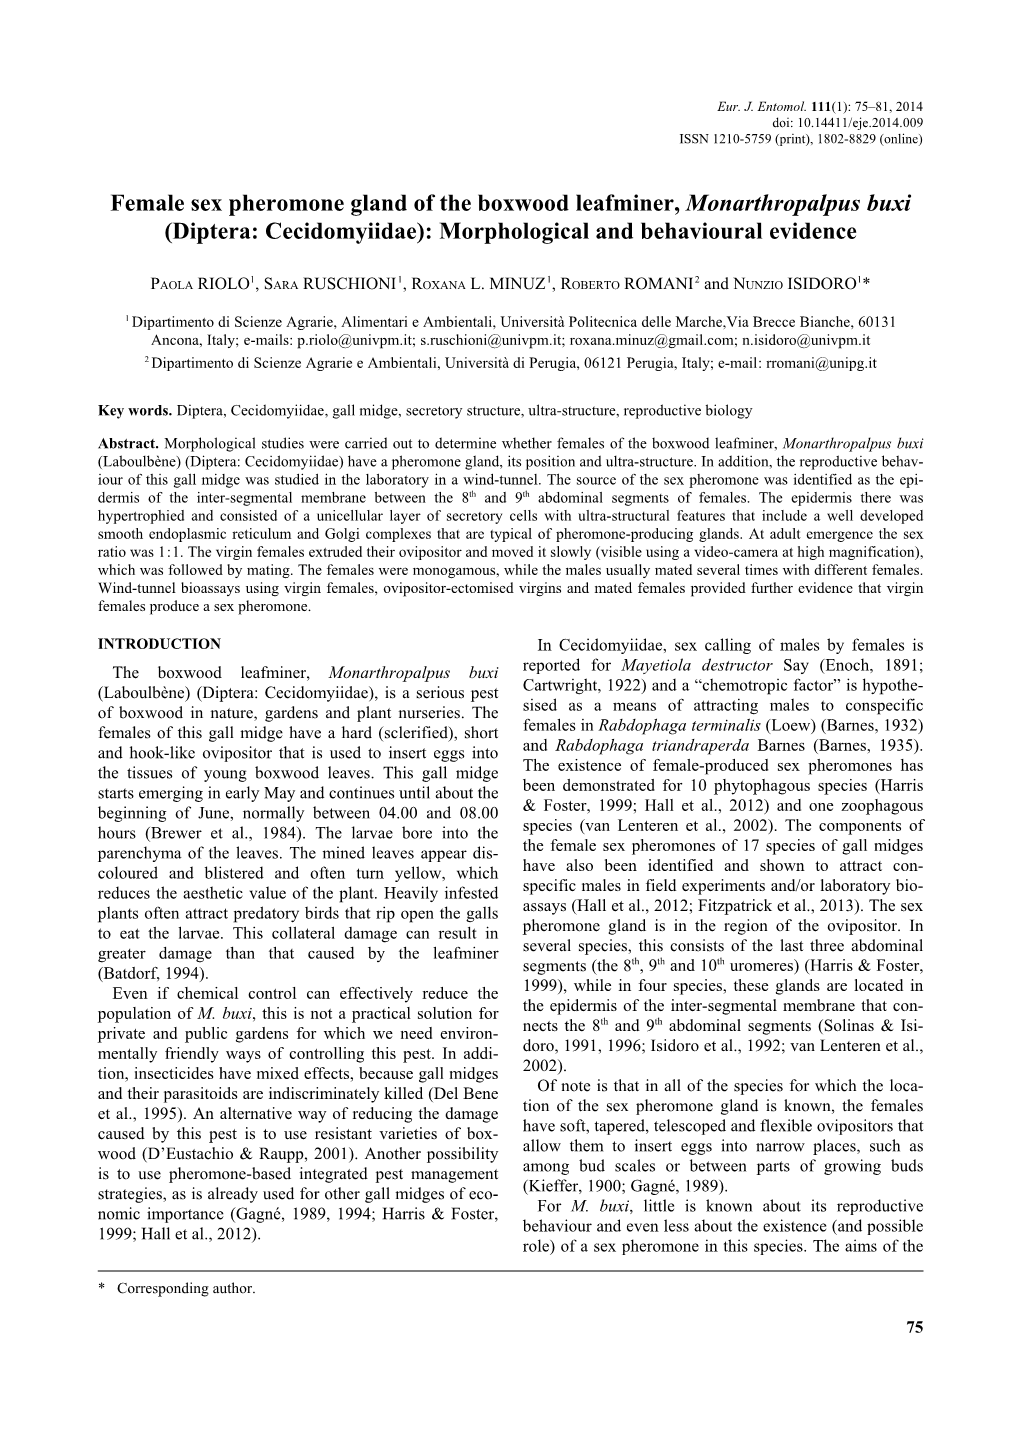 Diptera: Cecidomyiidae): Morphological and Behavioural Evidence